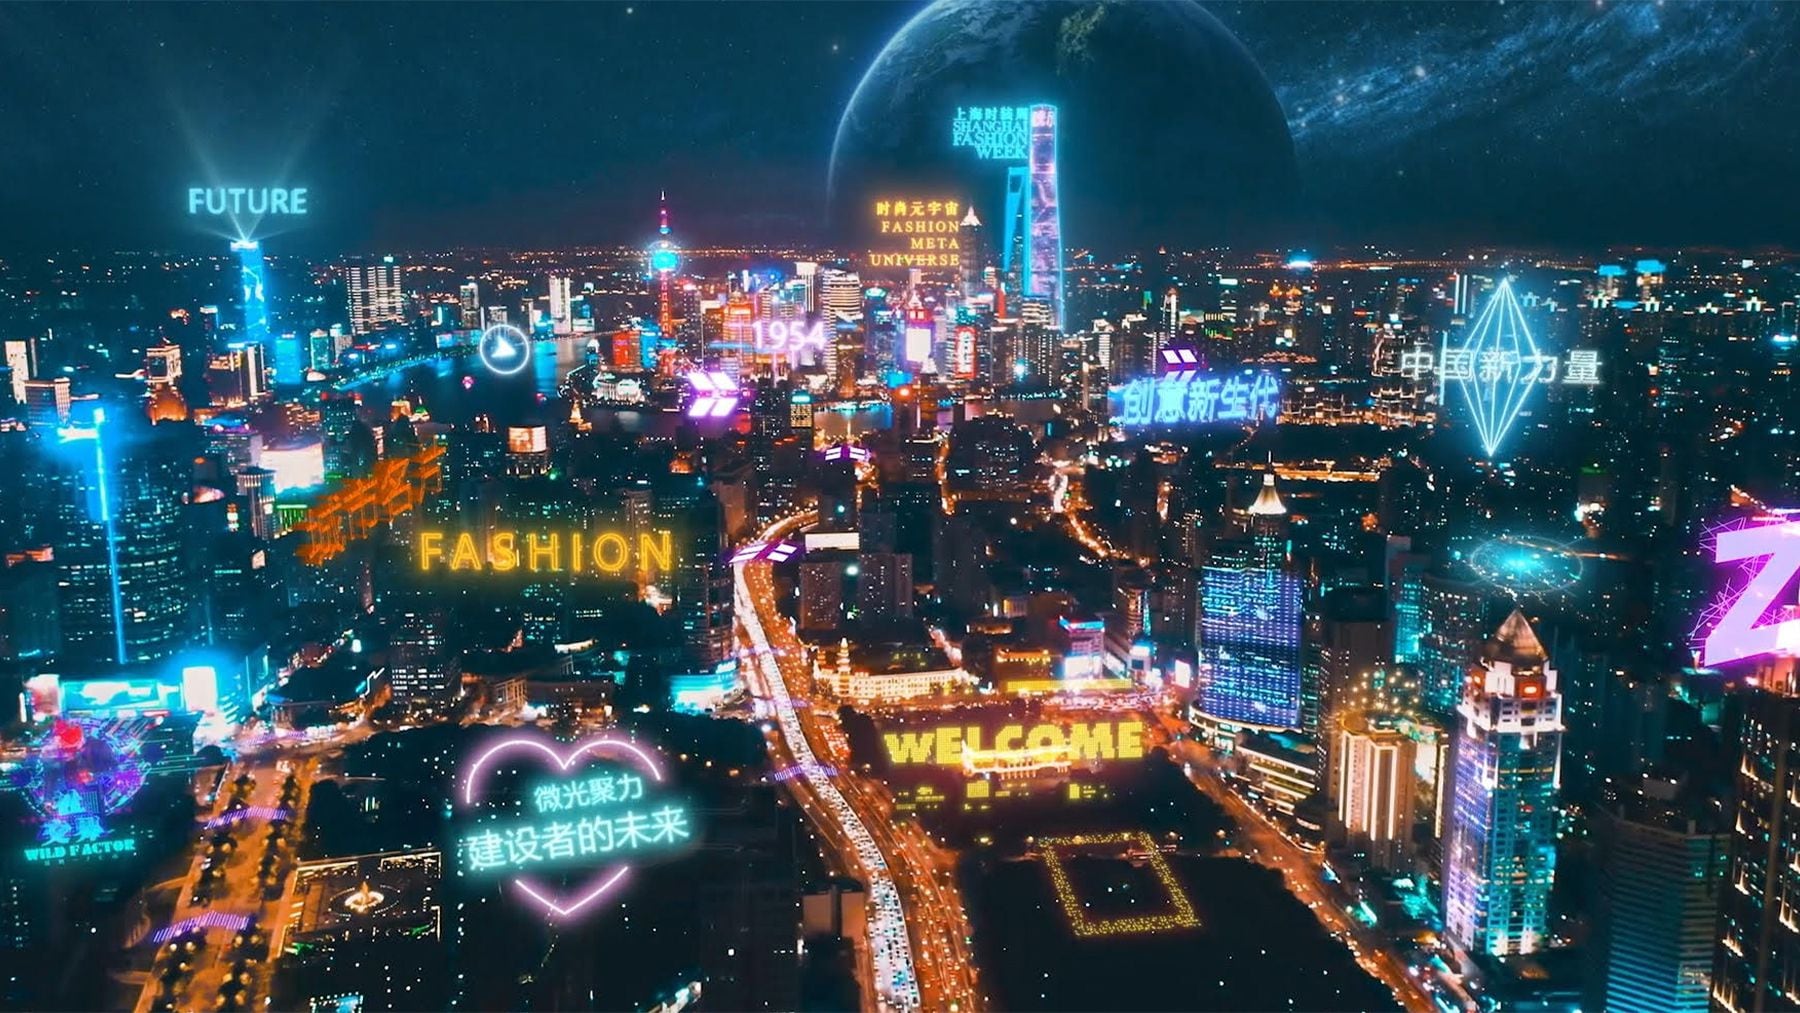 Kesepakatan Douyin Dengan Hasil Hasil Pekan Mode Shanghai